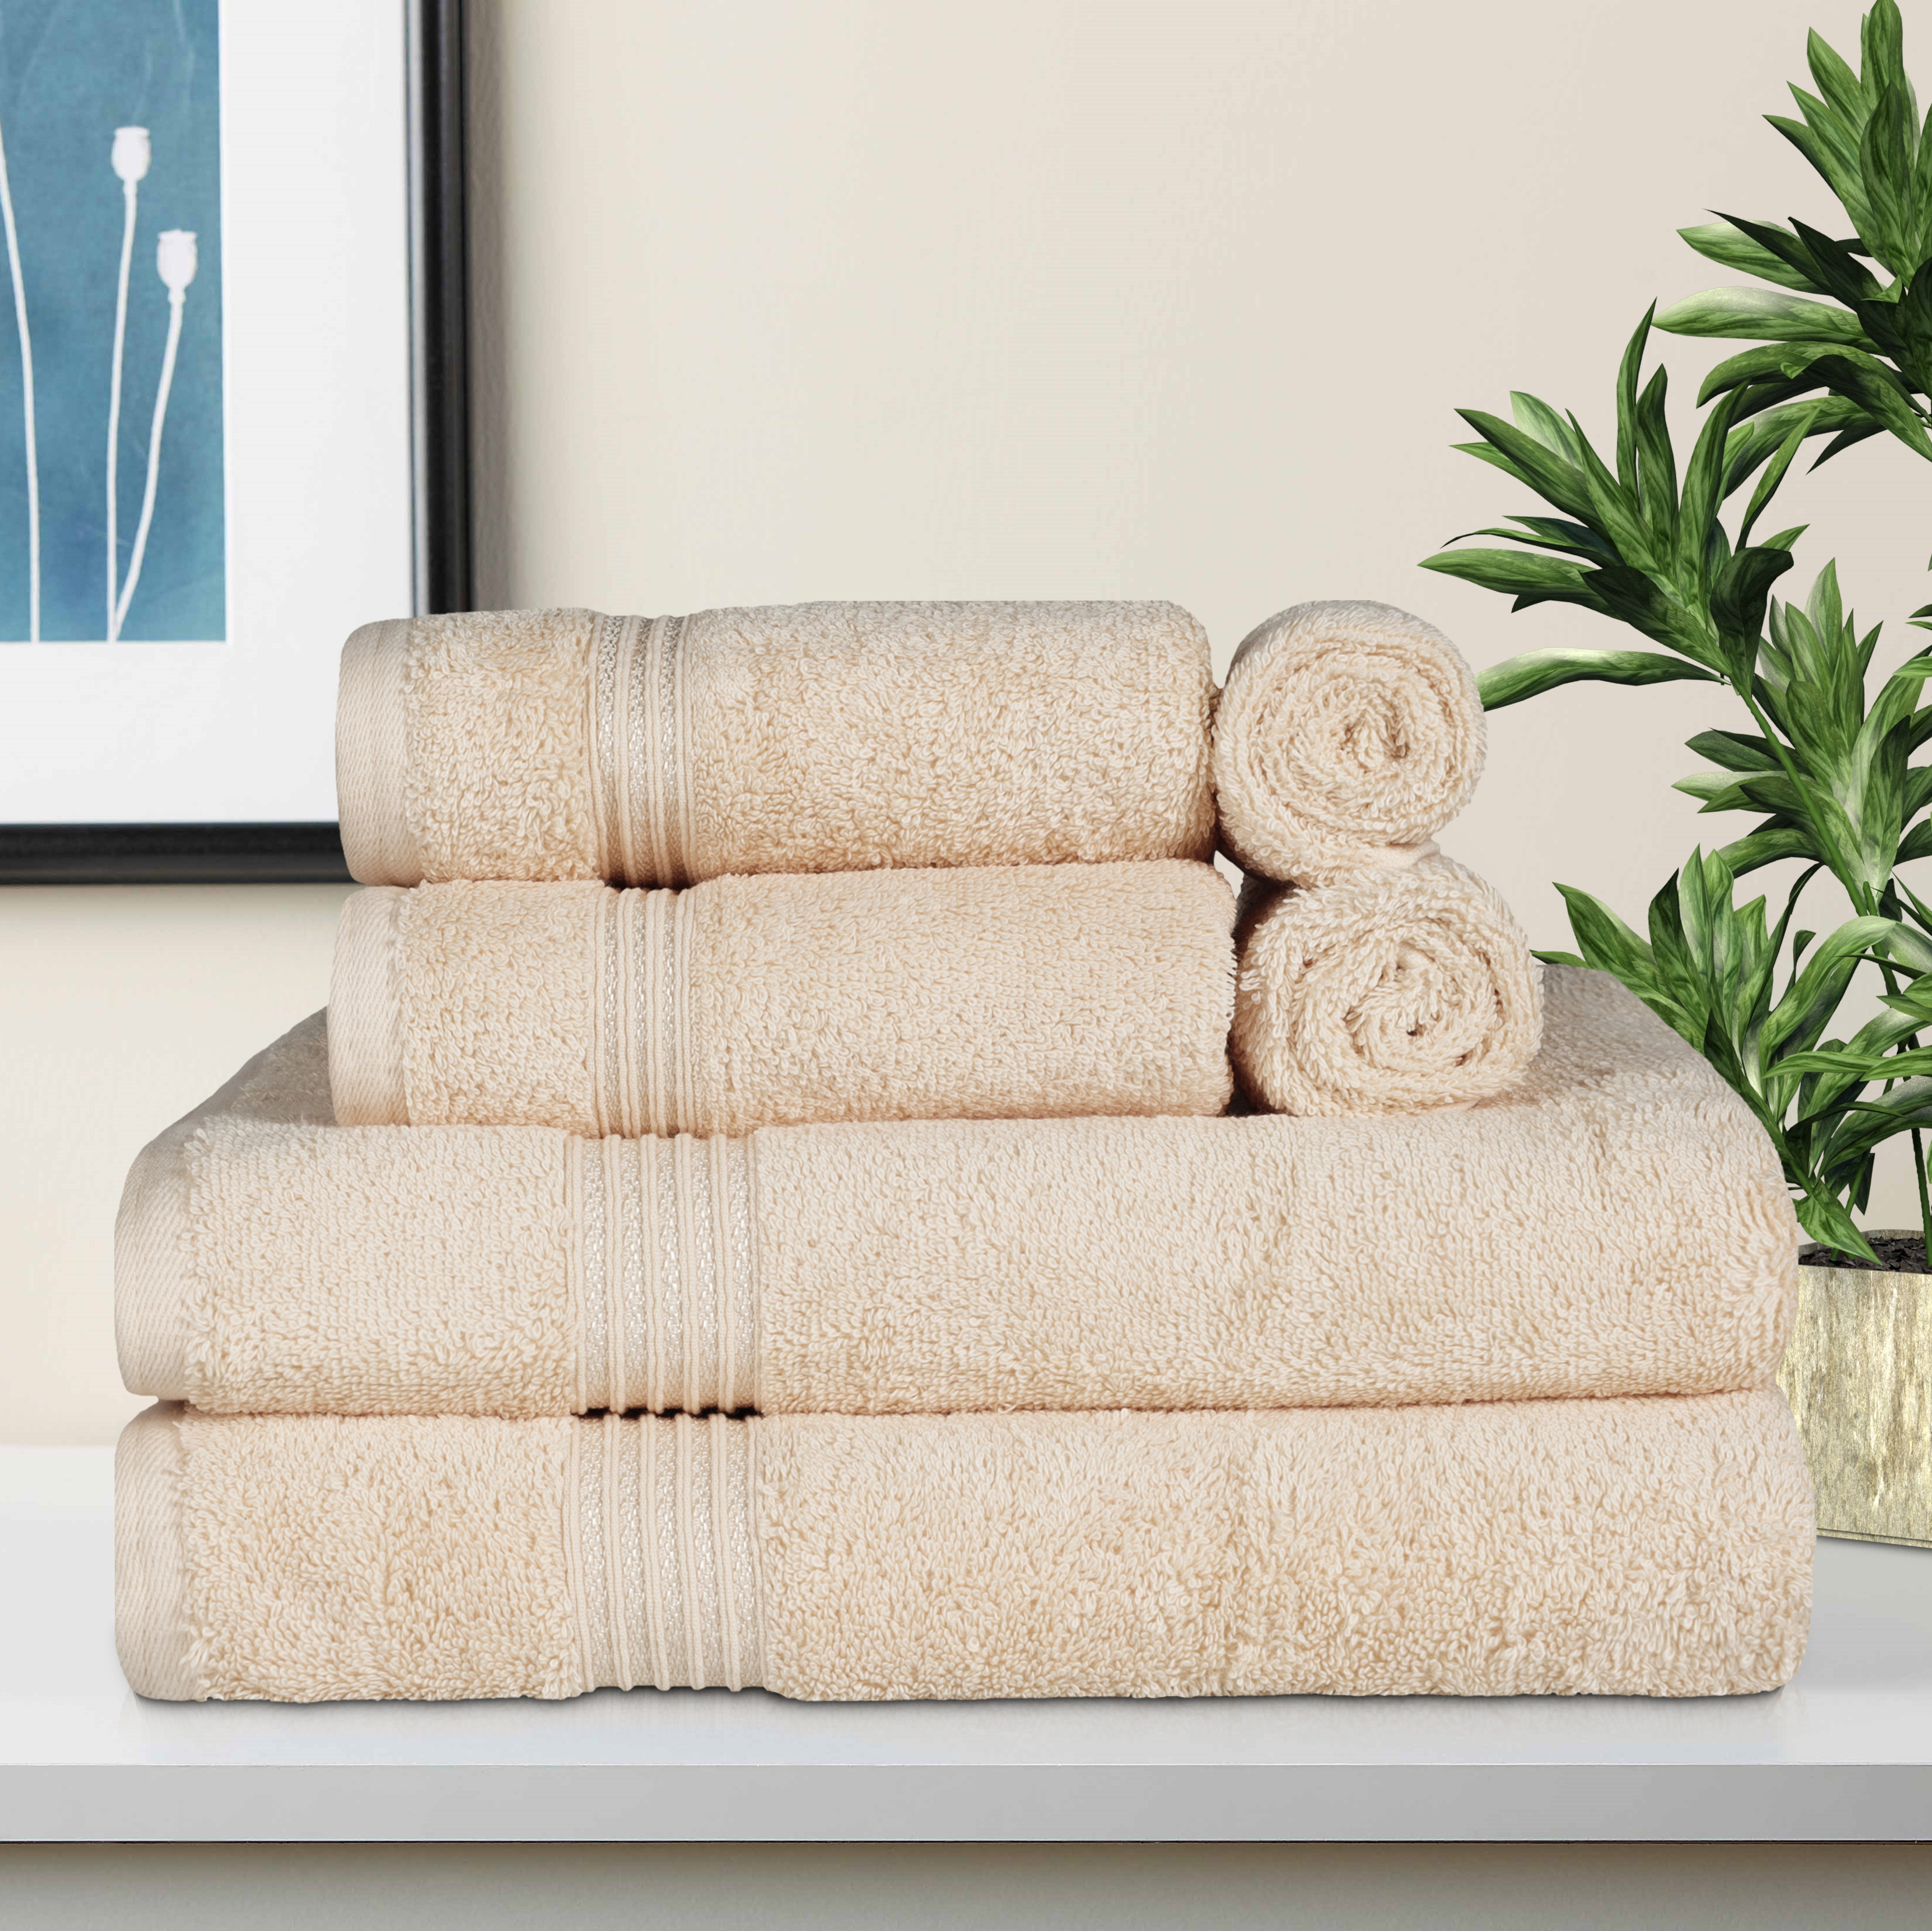 100% Combed Cotton Super Soft Absorbent 6 Piece Bathroom Towel Bale Set 